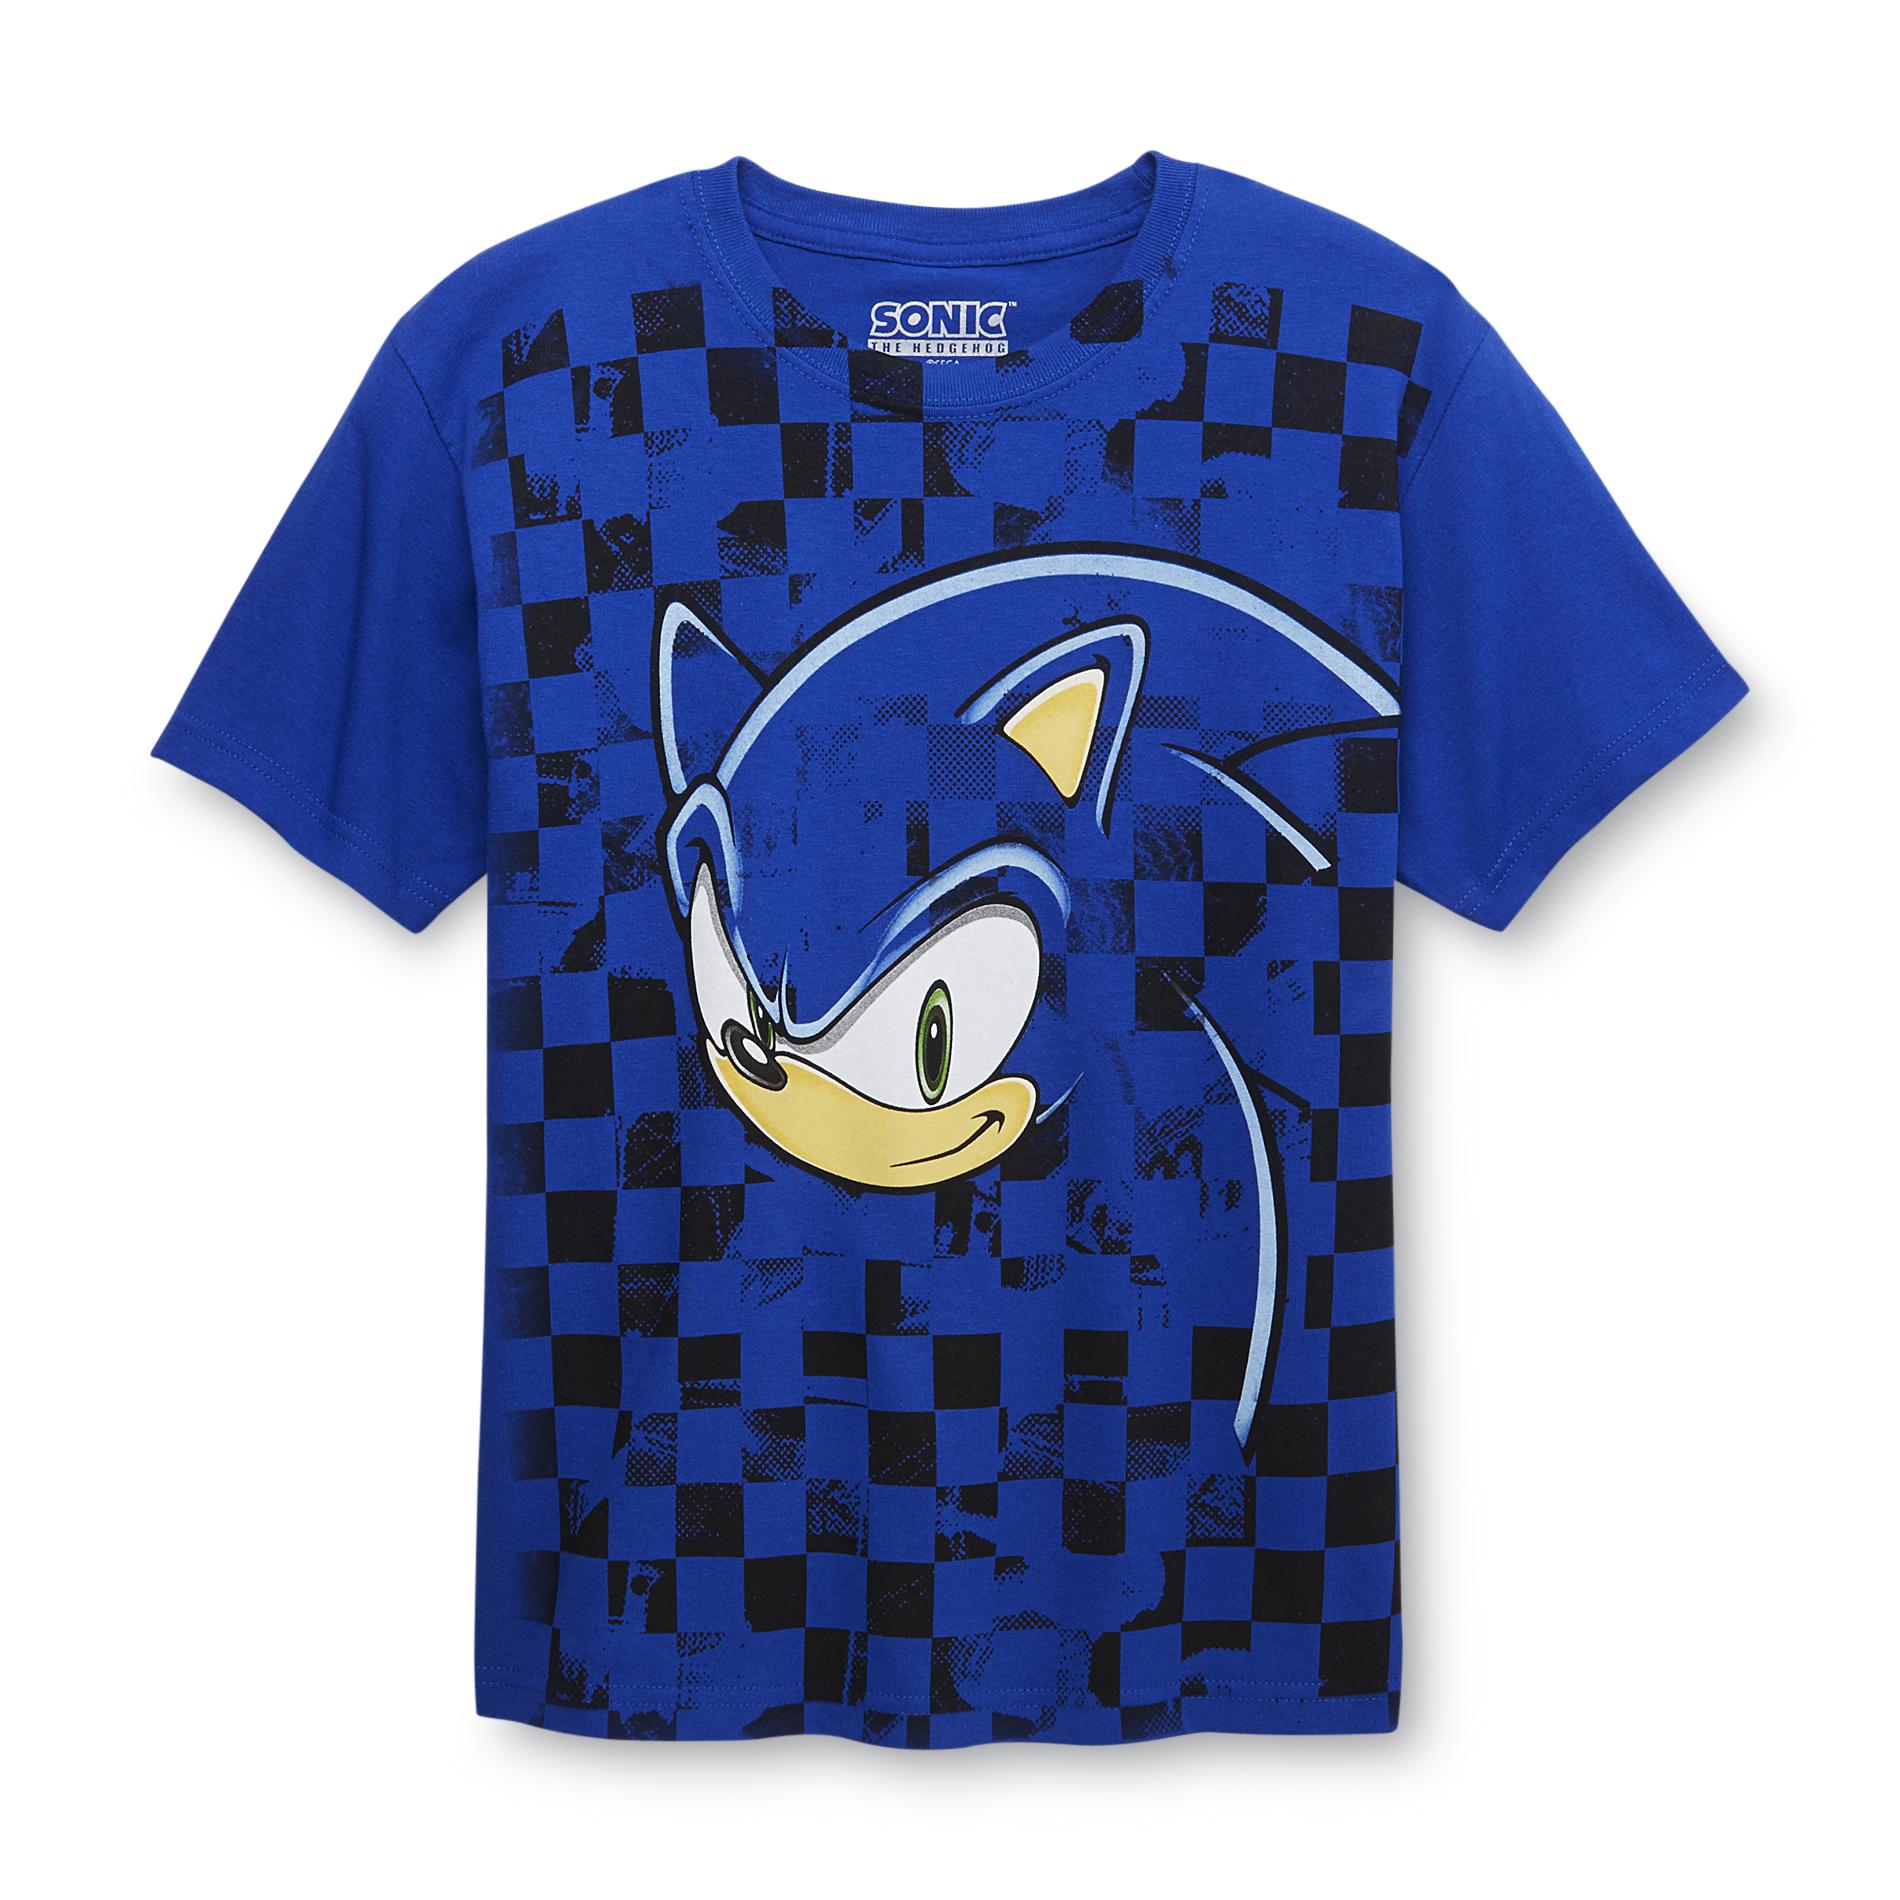 Sonic the Hedgehog Boy's Graphic T-Shirt